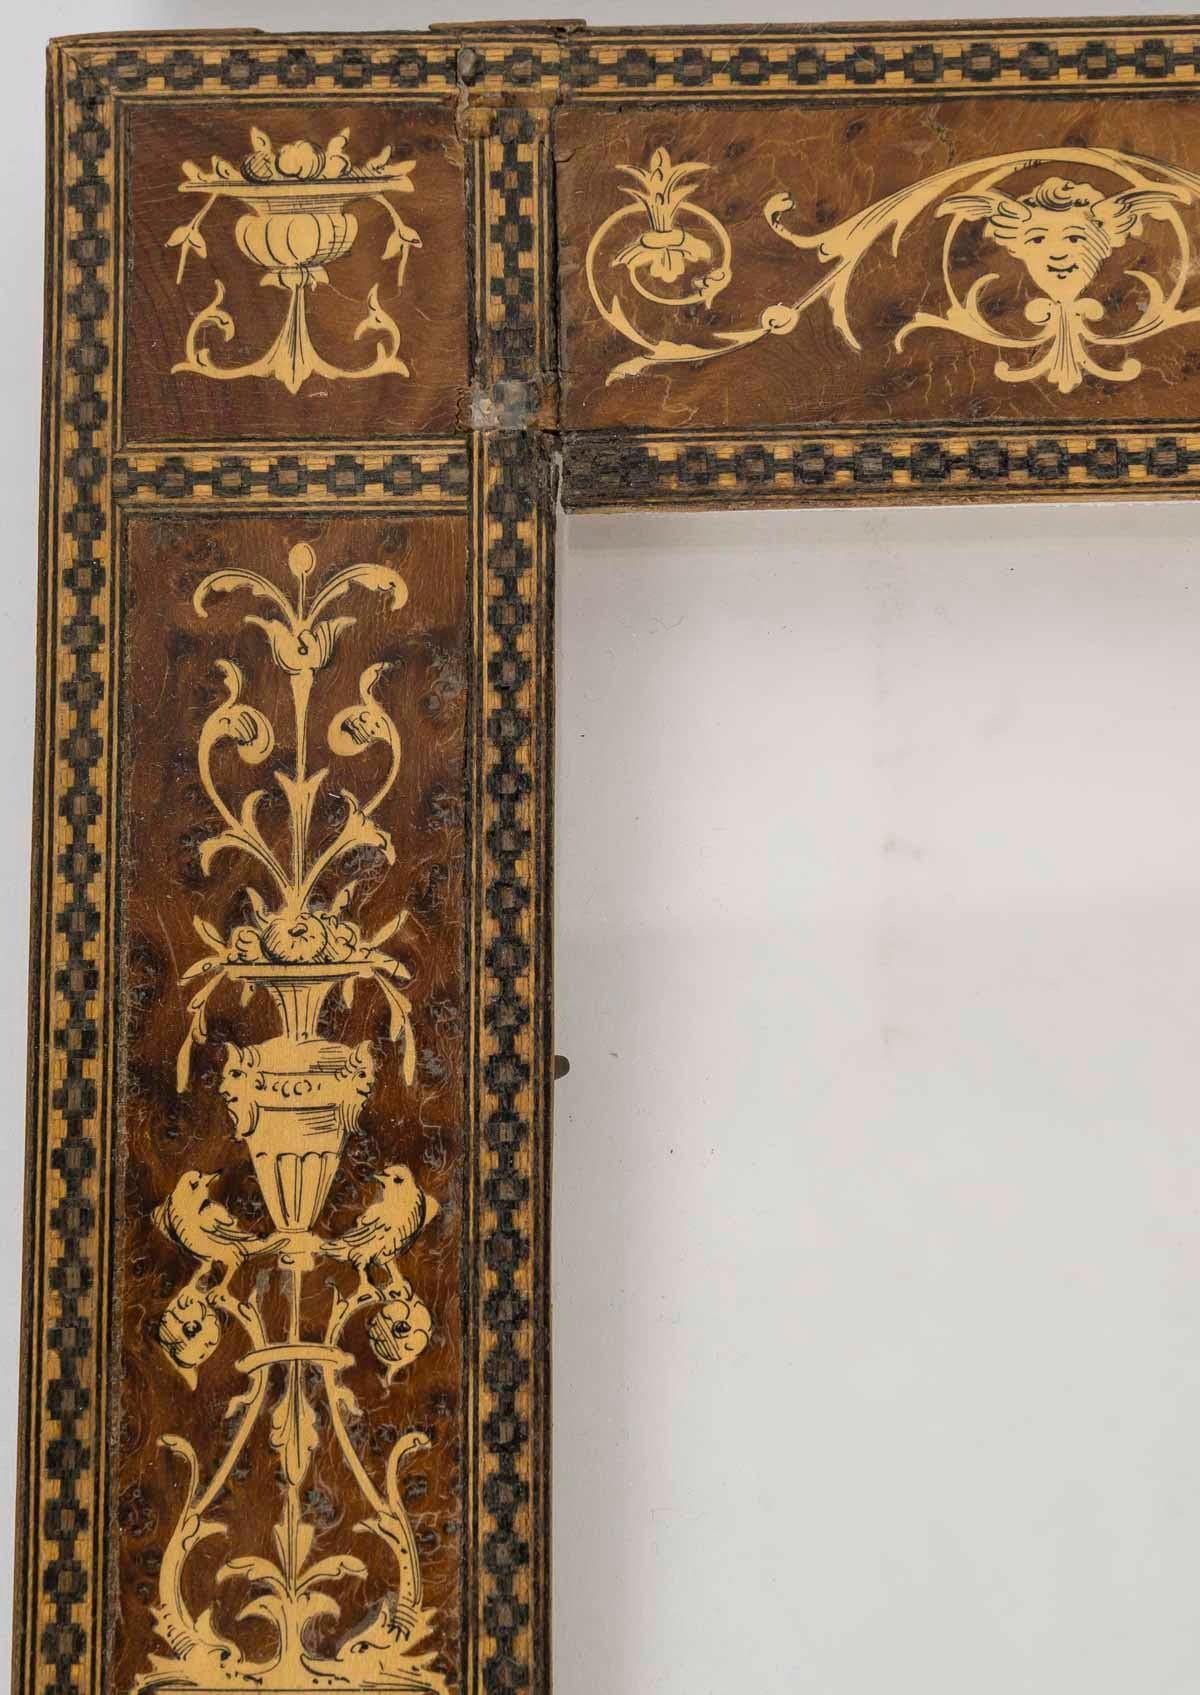 19th century Italian frame in Renaissance style wood marquetry.

19th century Italian Renaissance style wood marquetry frame.
Frame: H: 25.5cm, W: 20cm, D: 1cm
Interior view: H: 14,8cm, W: 10cm